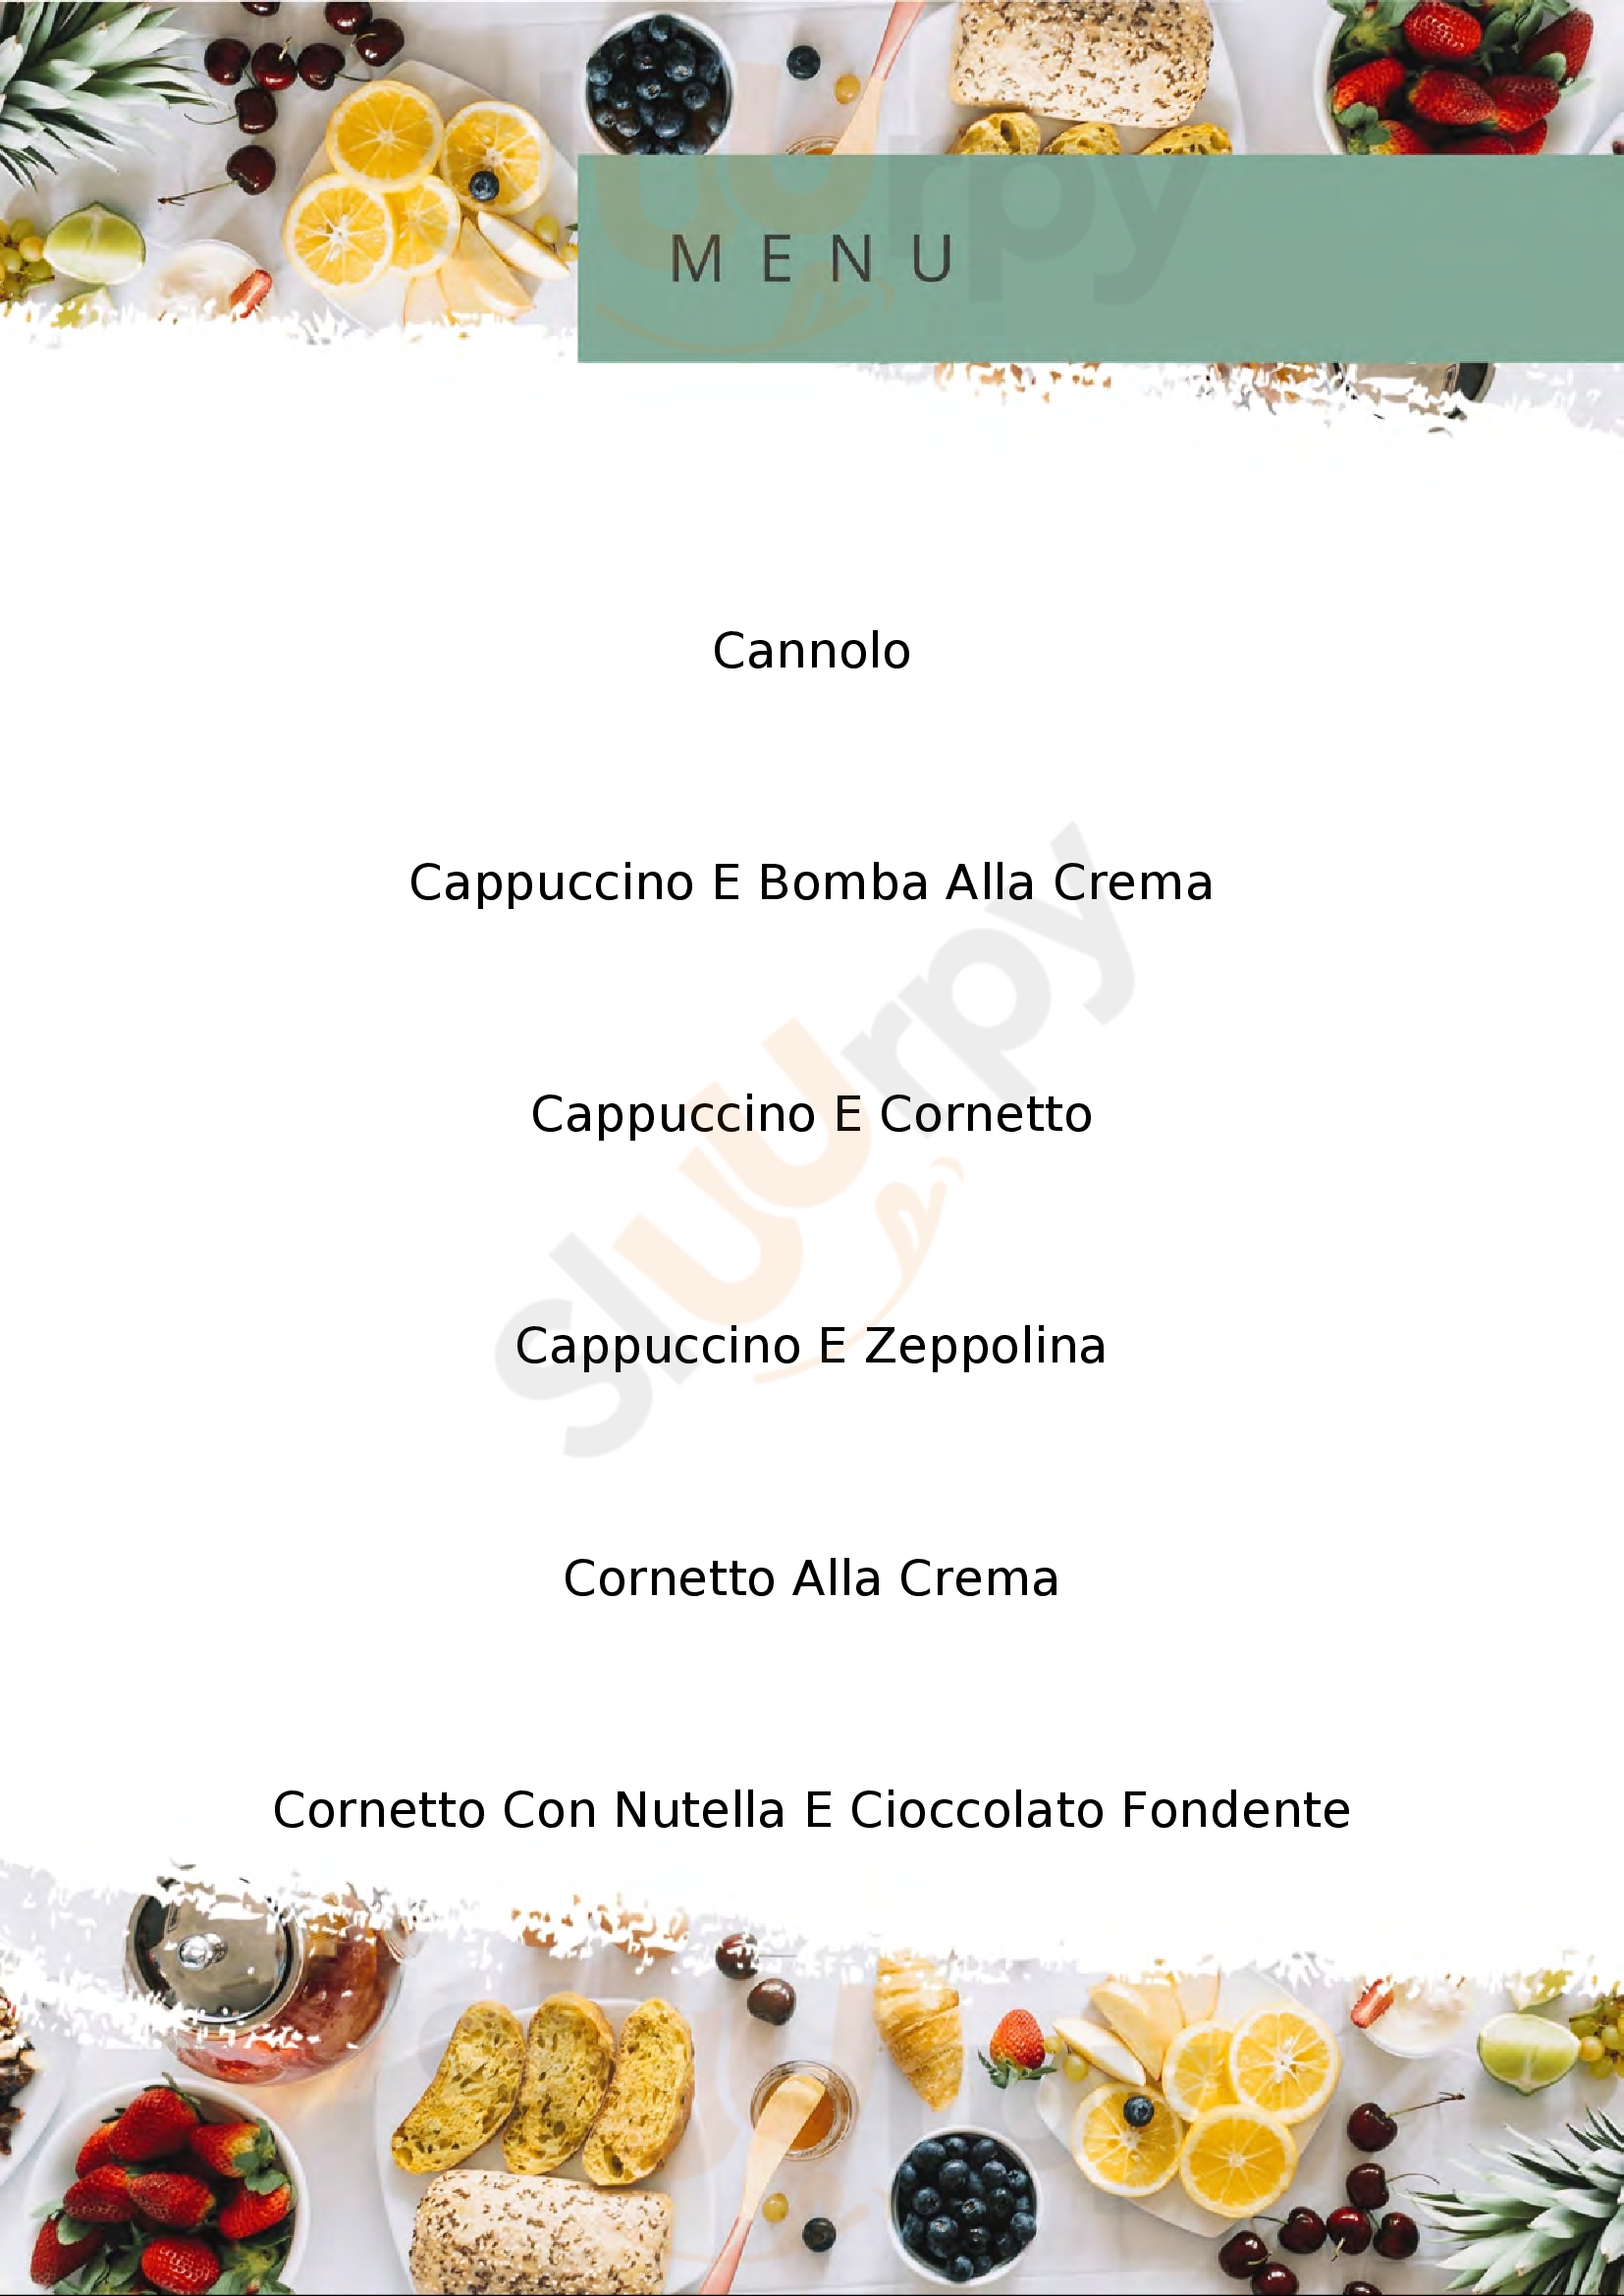 Pasticceria Buttafoco Terracina menù 1 pagina